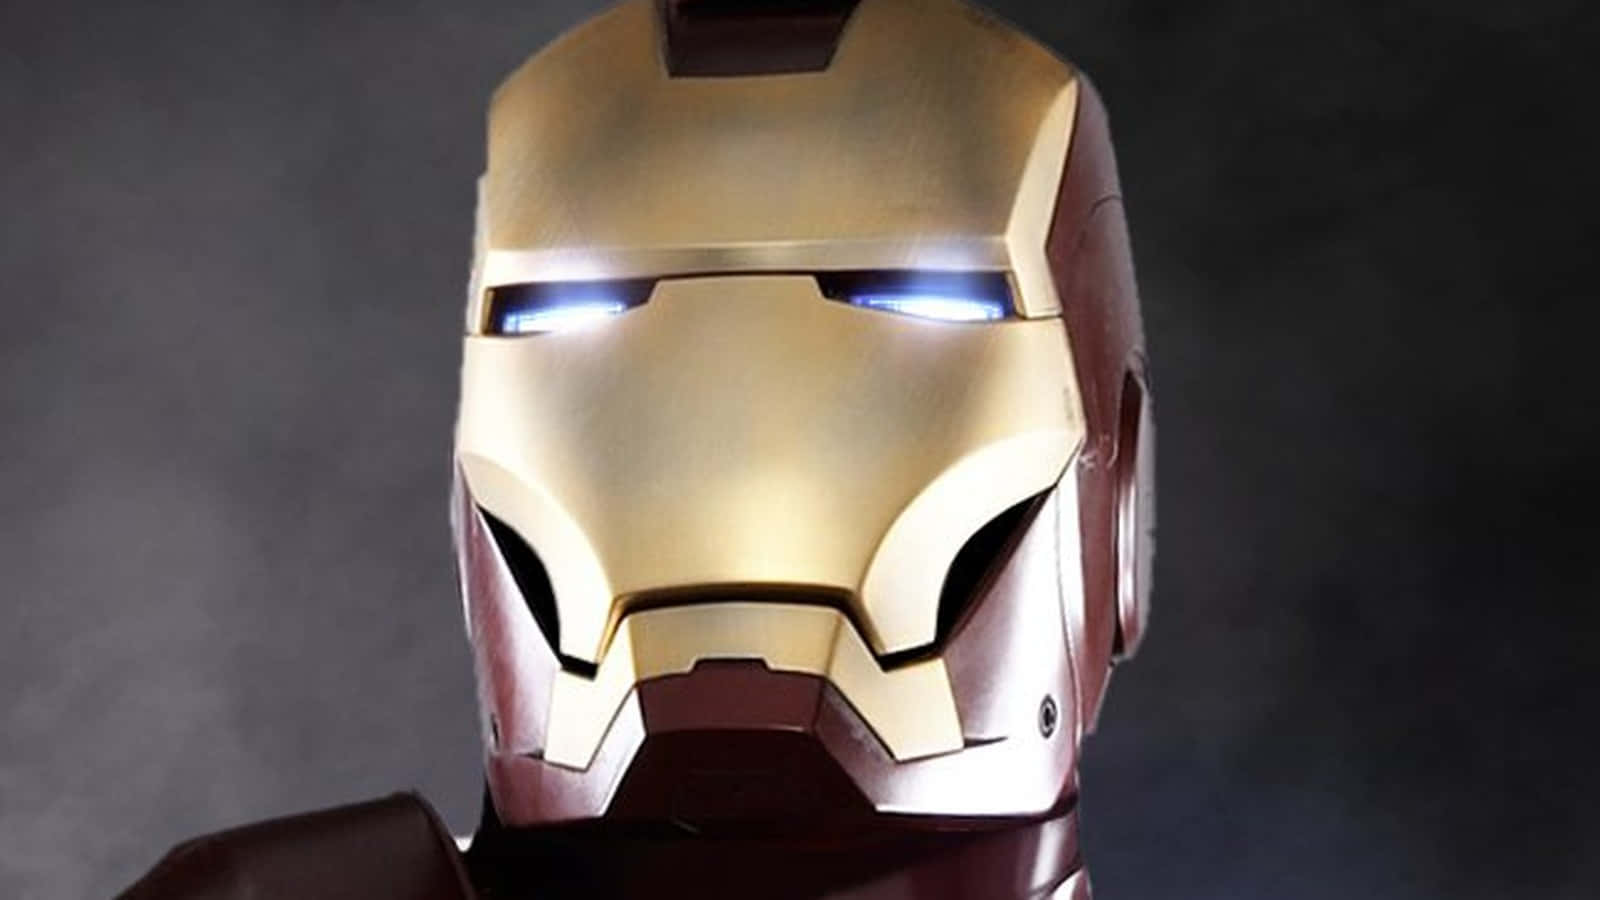 Iron Man Helmet Close-Up Picture